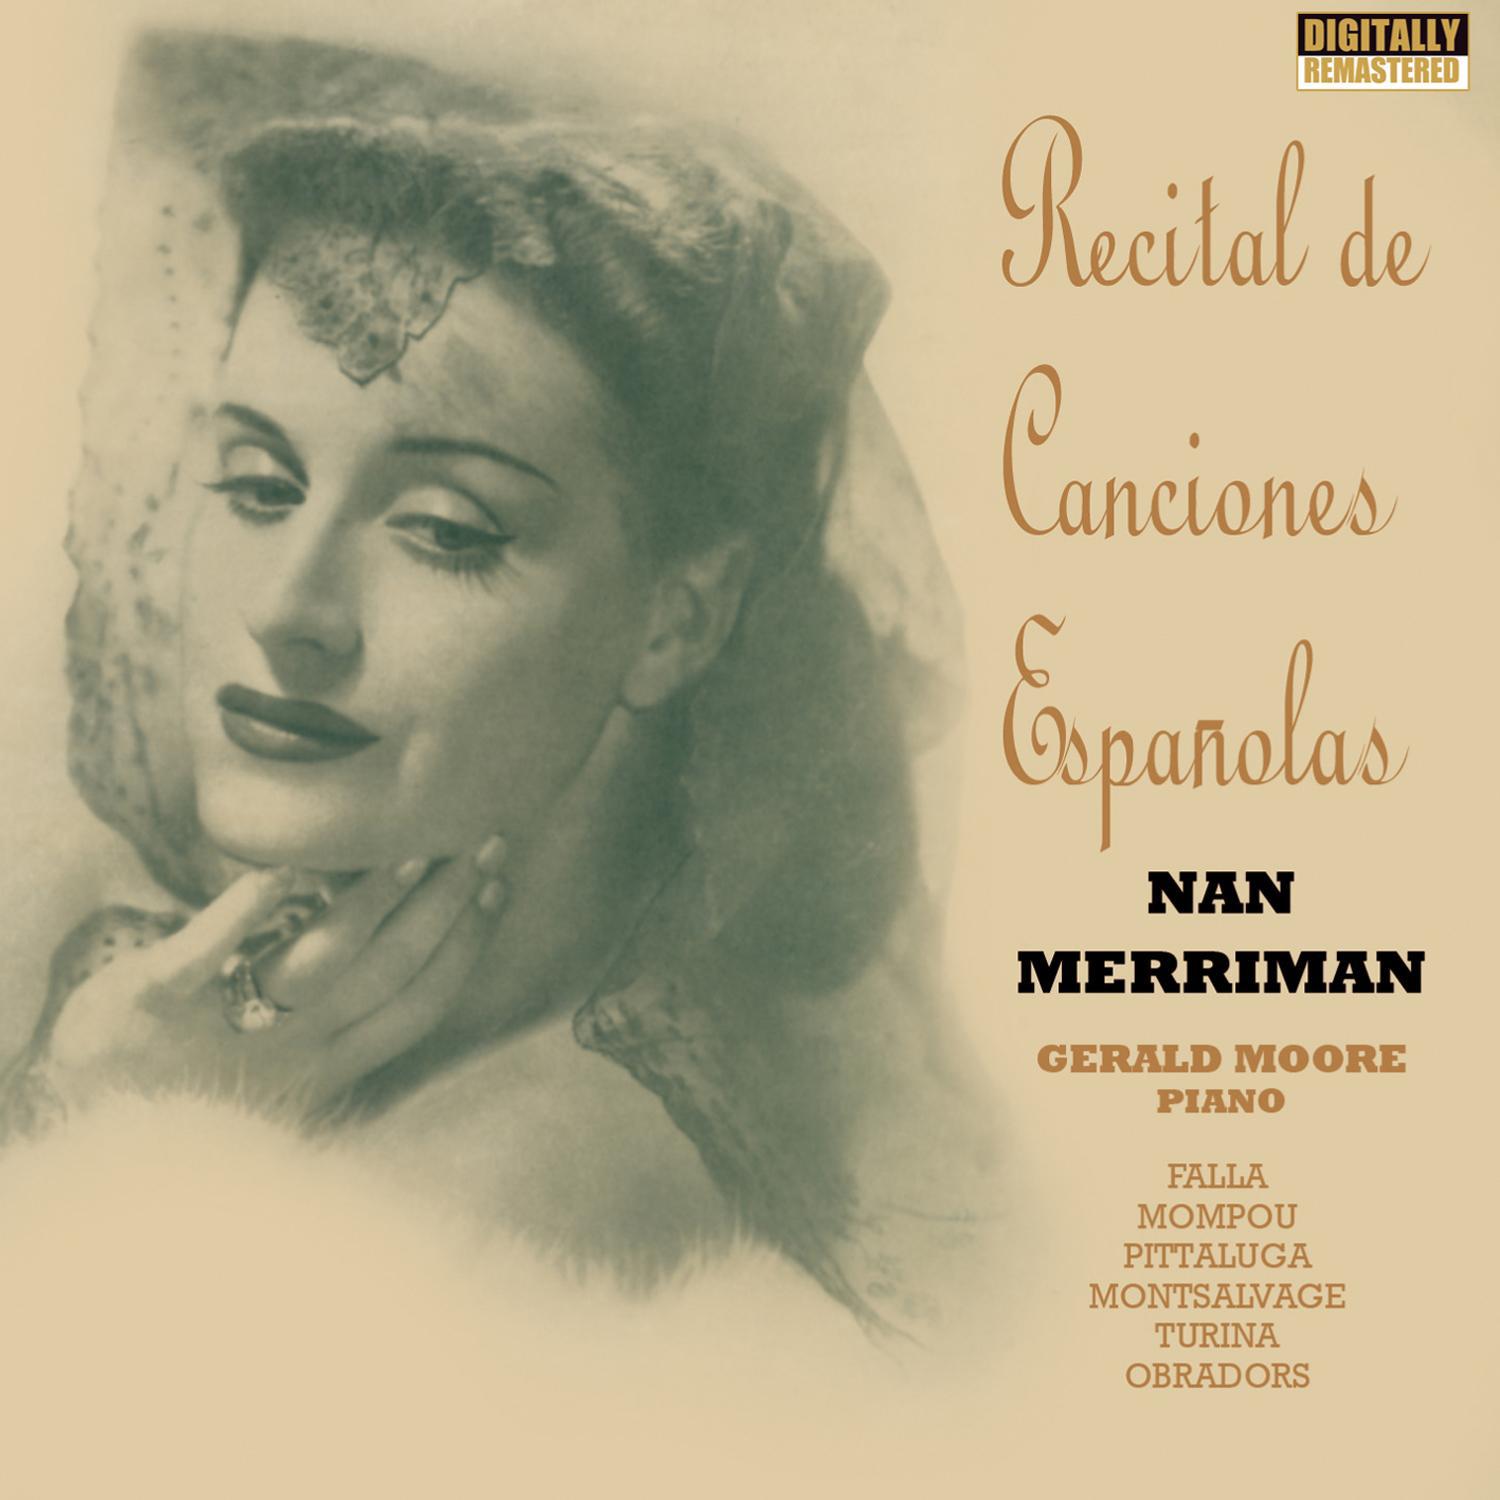 Siete Canciones Populares Espa olas: Nana